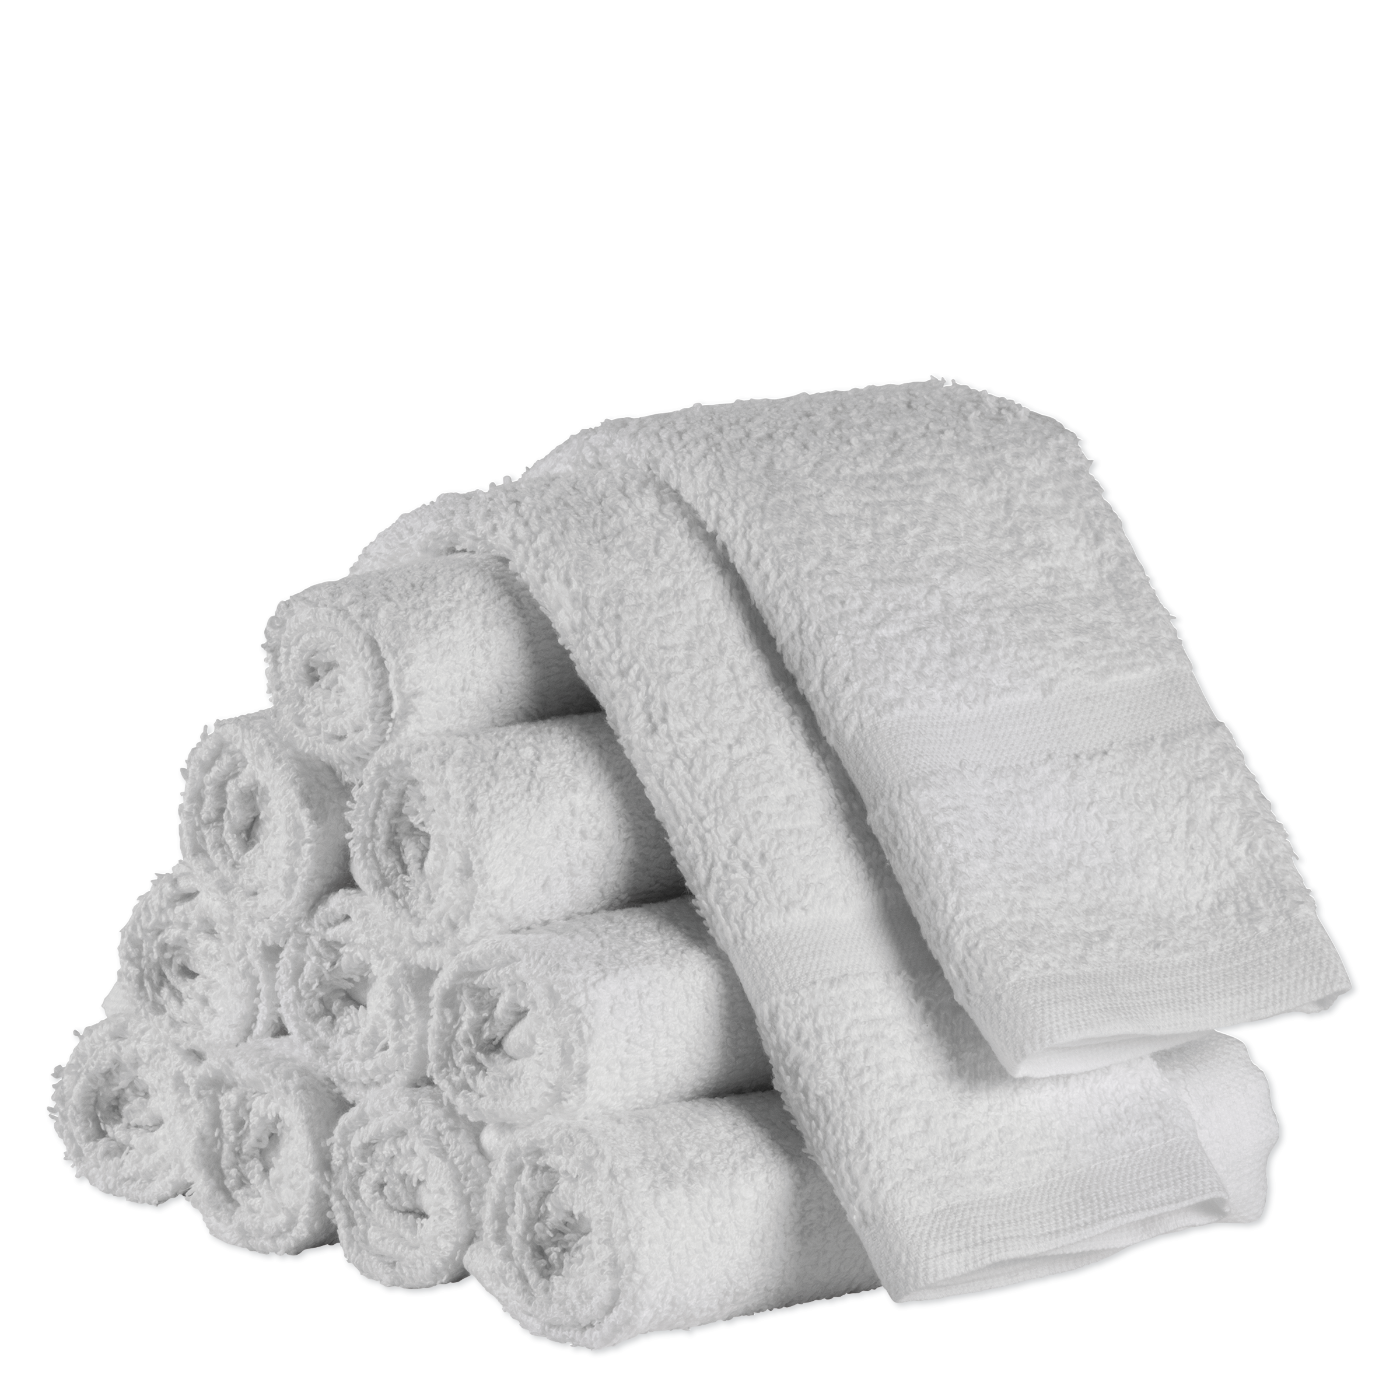 Cotton Wash Cloths, 12" x 12", 1 lb. - White